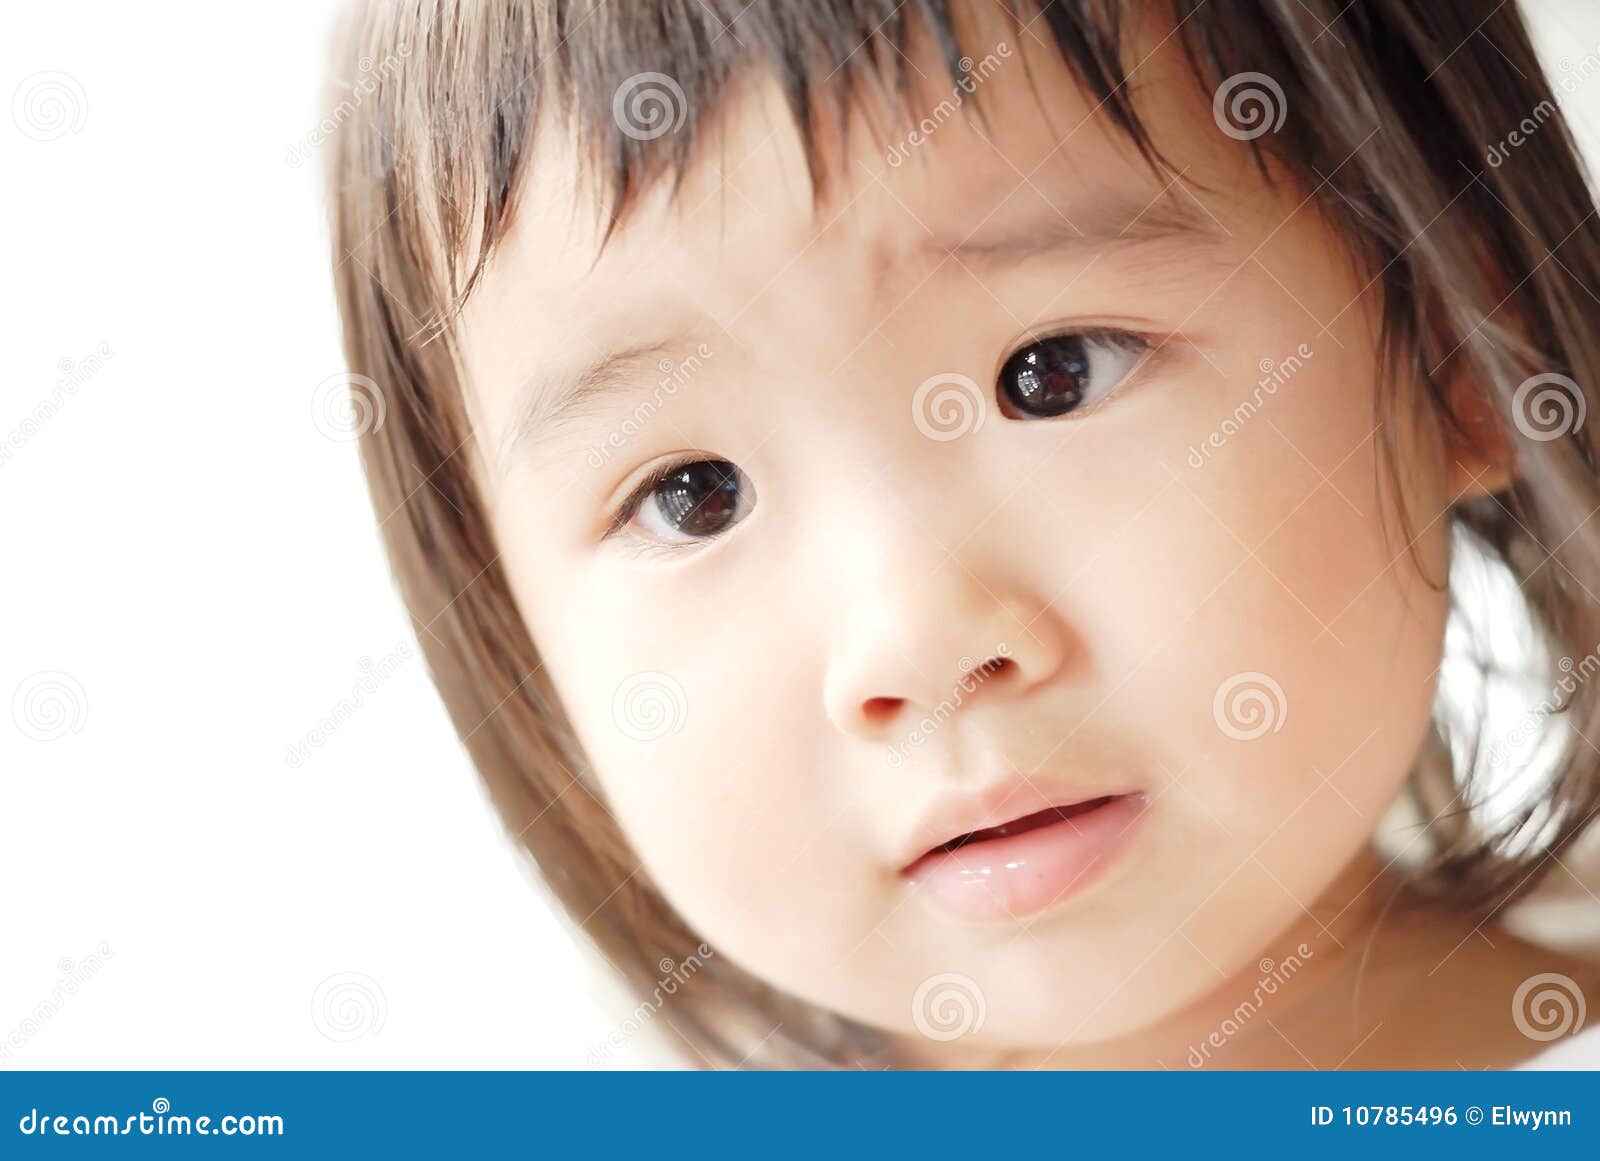 innocent asian baby face